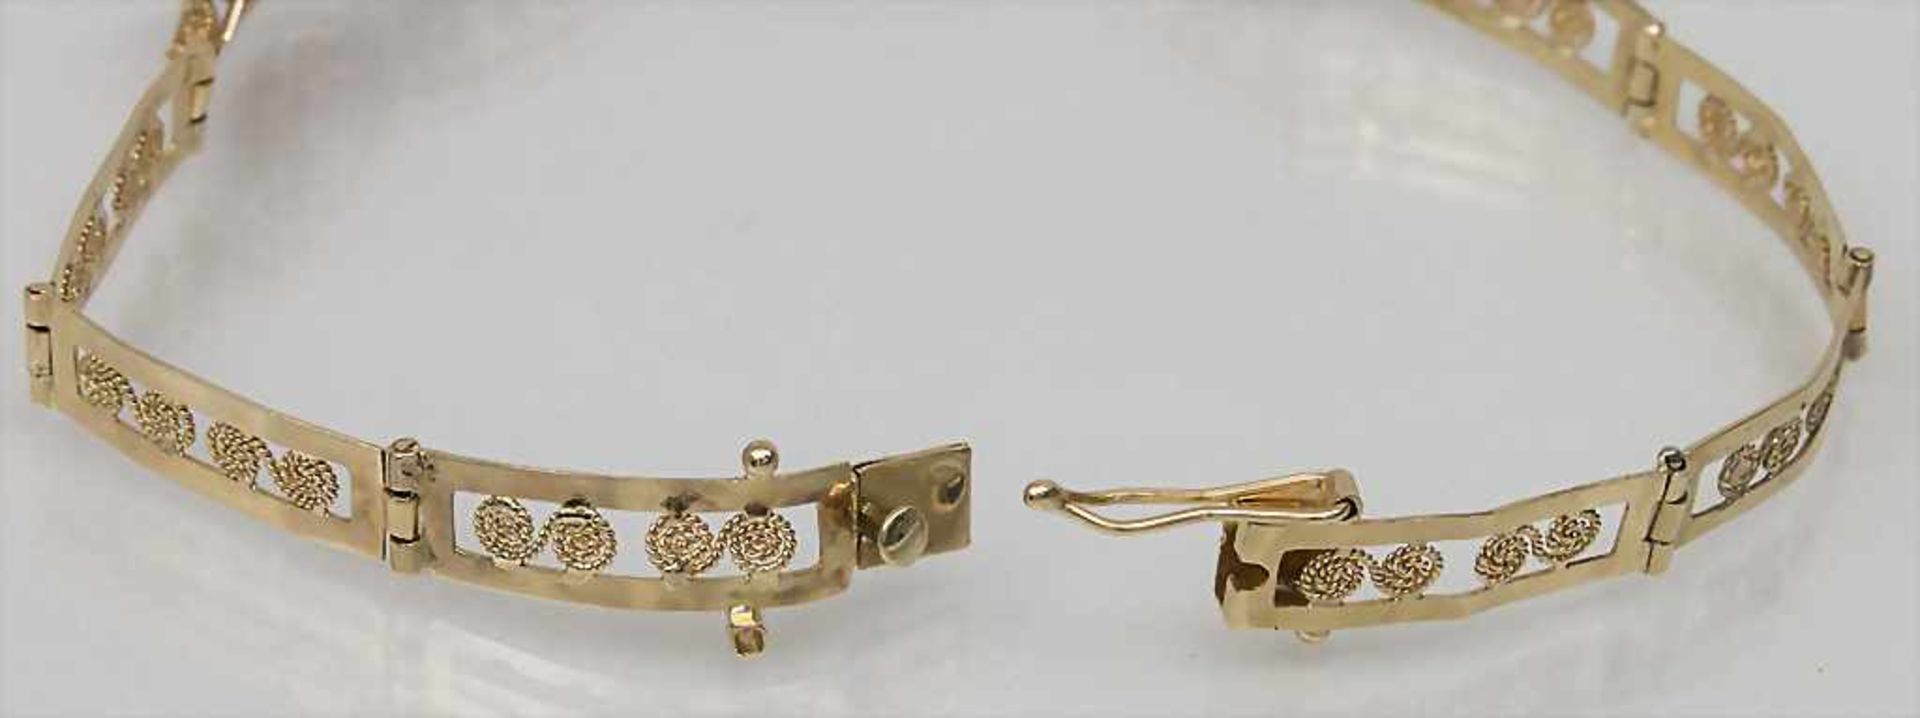 Goldarmband mit Smaragden / An 18k. gold bracelet with emaralds - Bild 2 aus 3